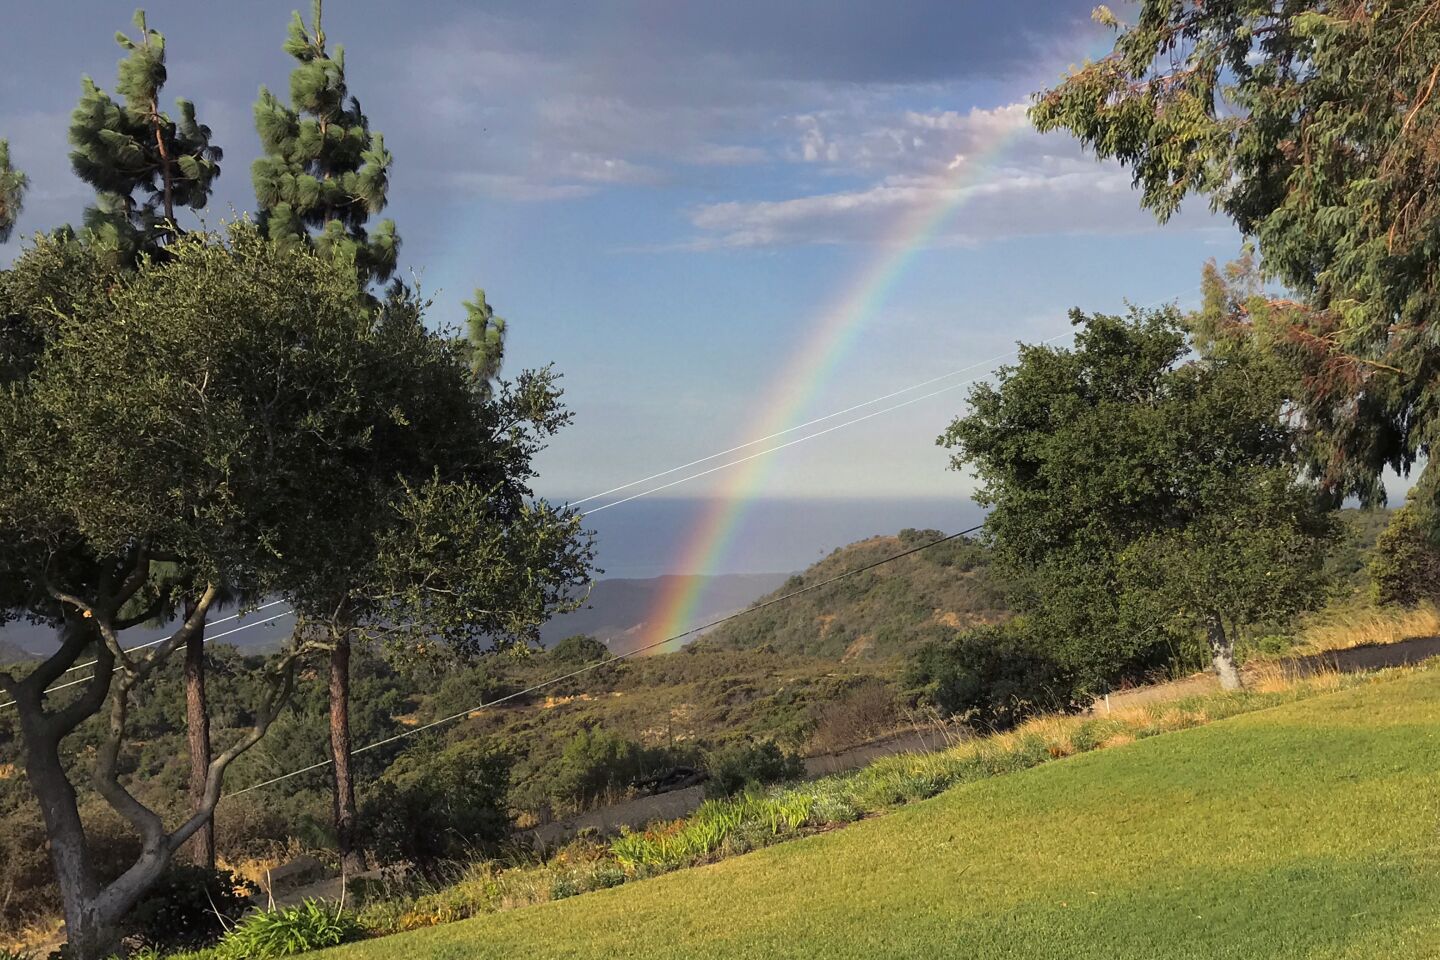 A rainbow seen through a break in trees in Santa Barbara.